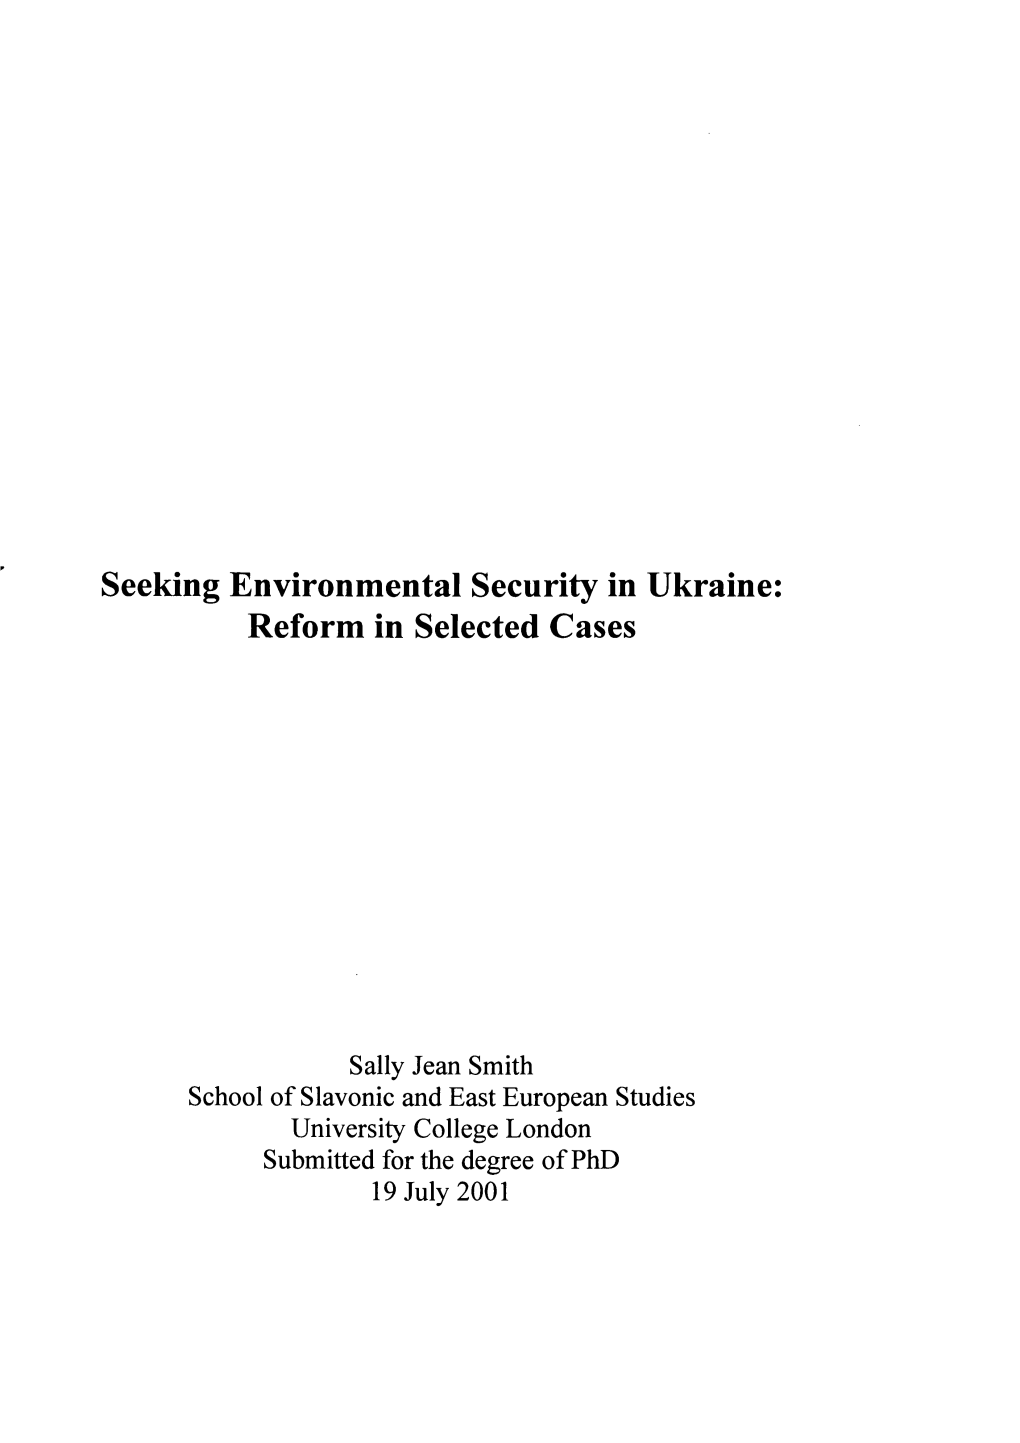 Seeking Environmental Security in Ukraine: Reform in Selected Cases